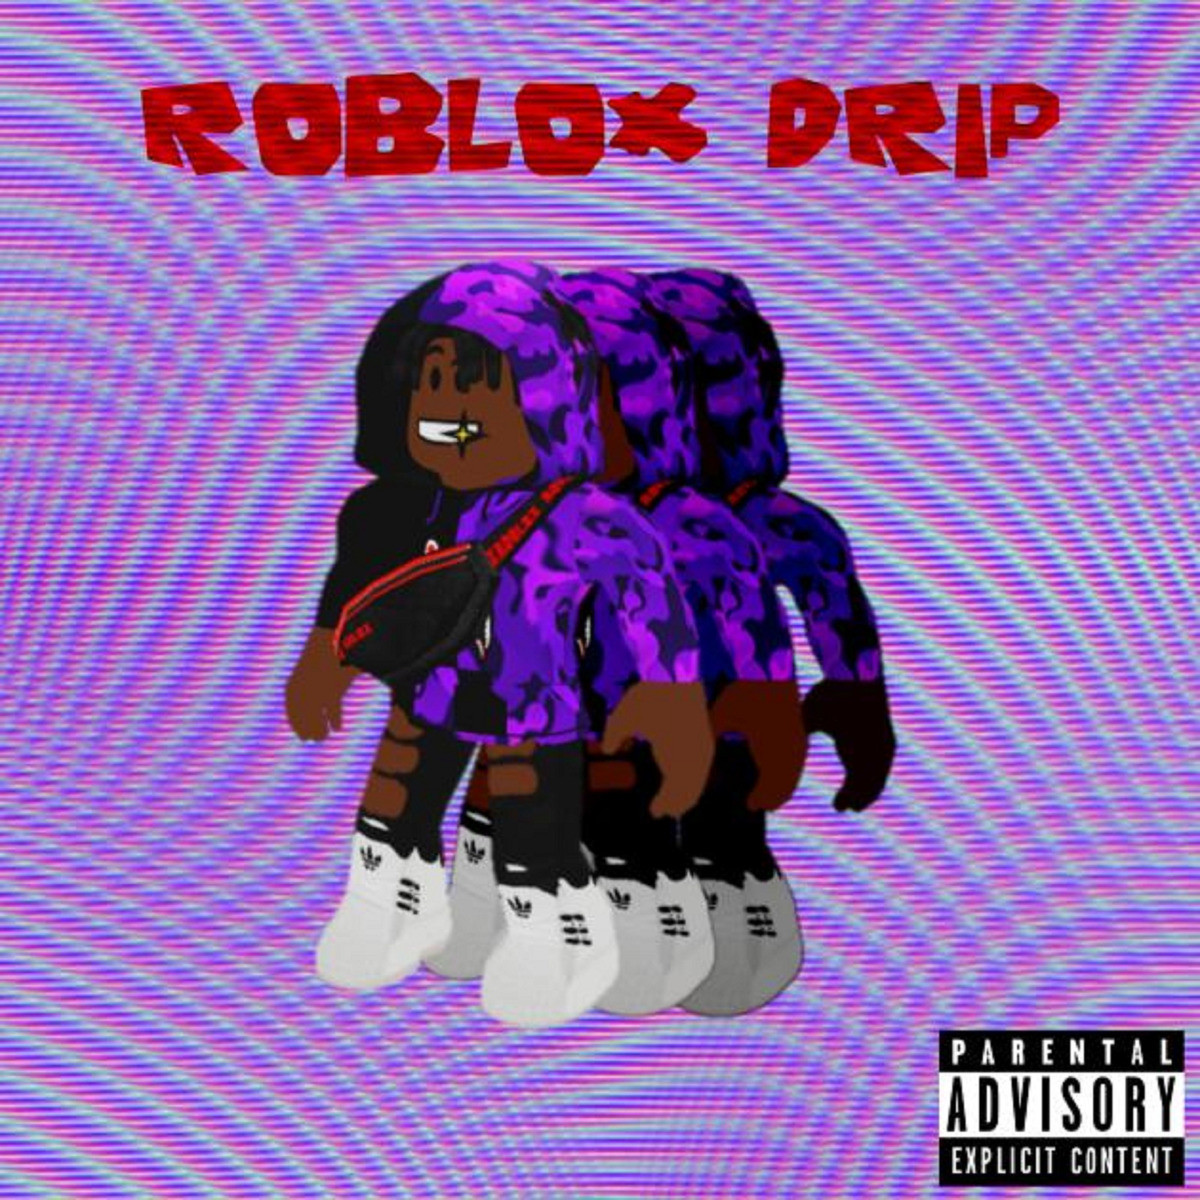 Roblox Drip Song Download Roblox Drip Mp3 French Song Online Free On Gaana Com - nai nai id song for roblox